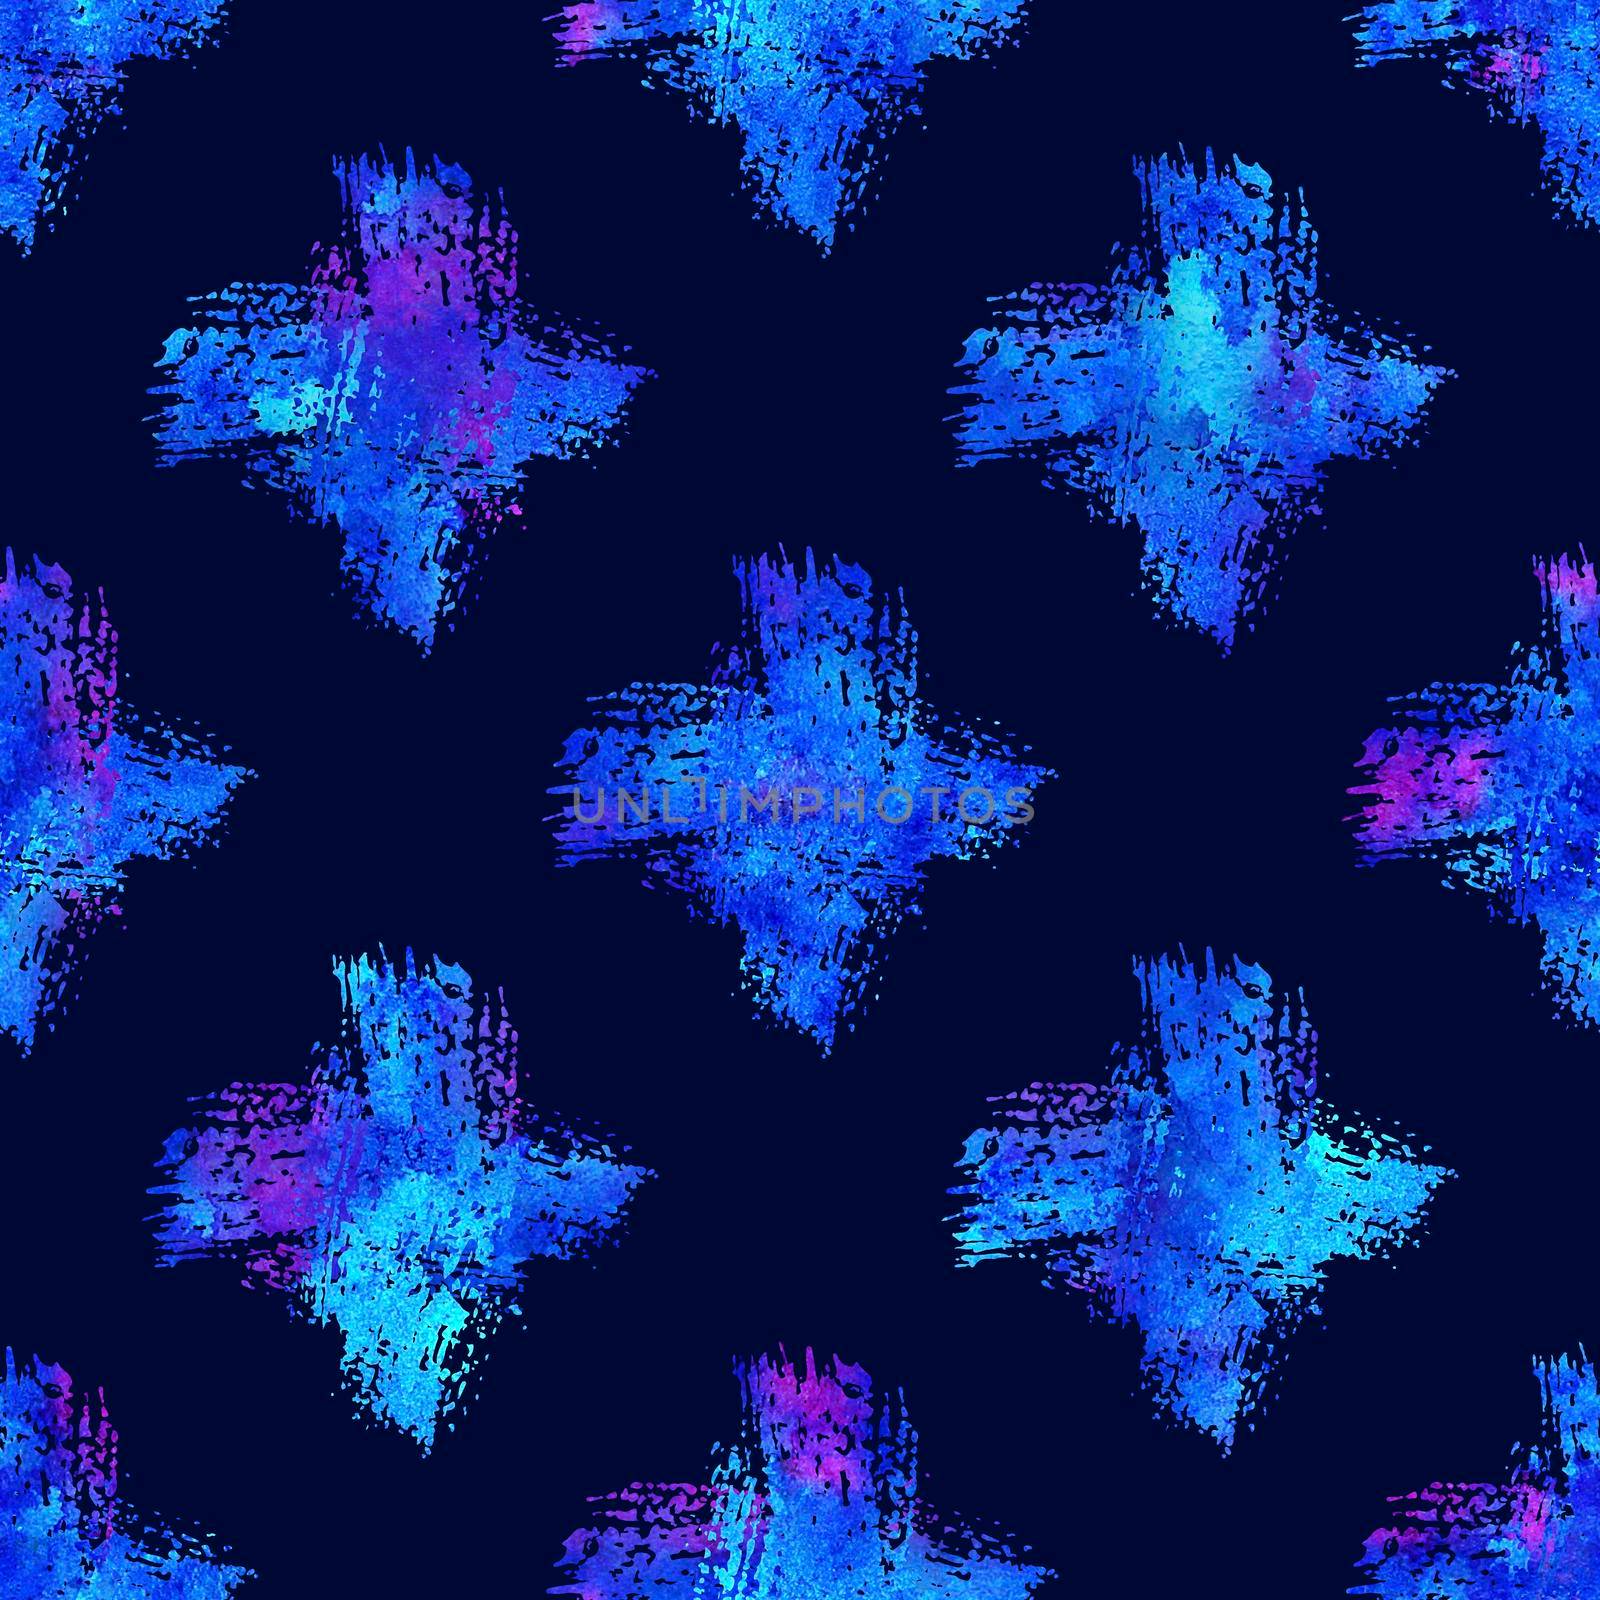 Watercolor Brush Cross Seamless Pattern Grange Geometric Design in Blue Color. Modern Grung Collage on Dark Blue BackgroundBackground.